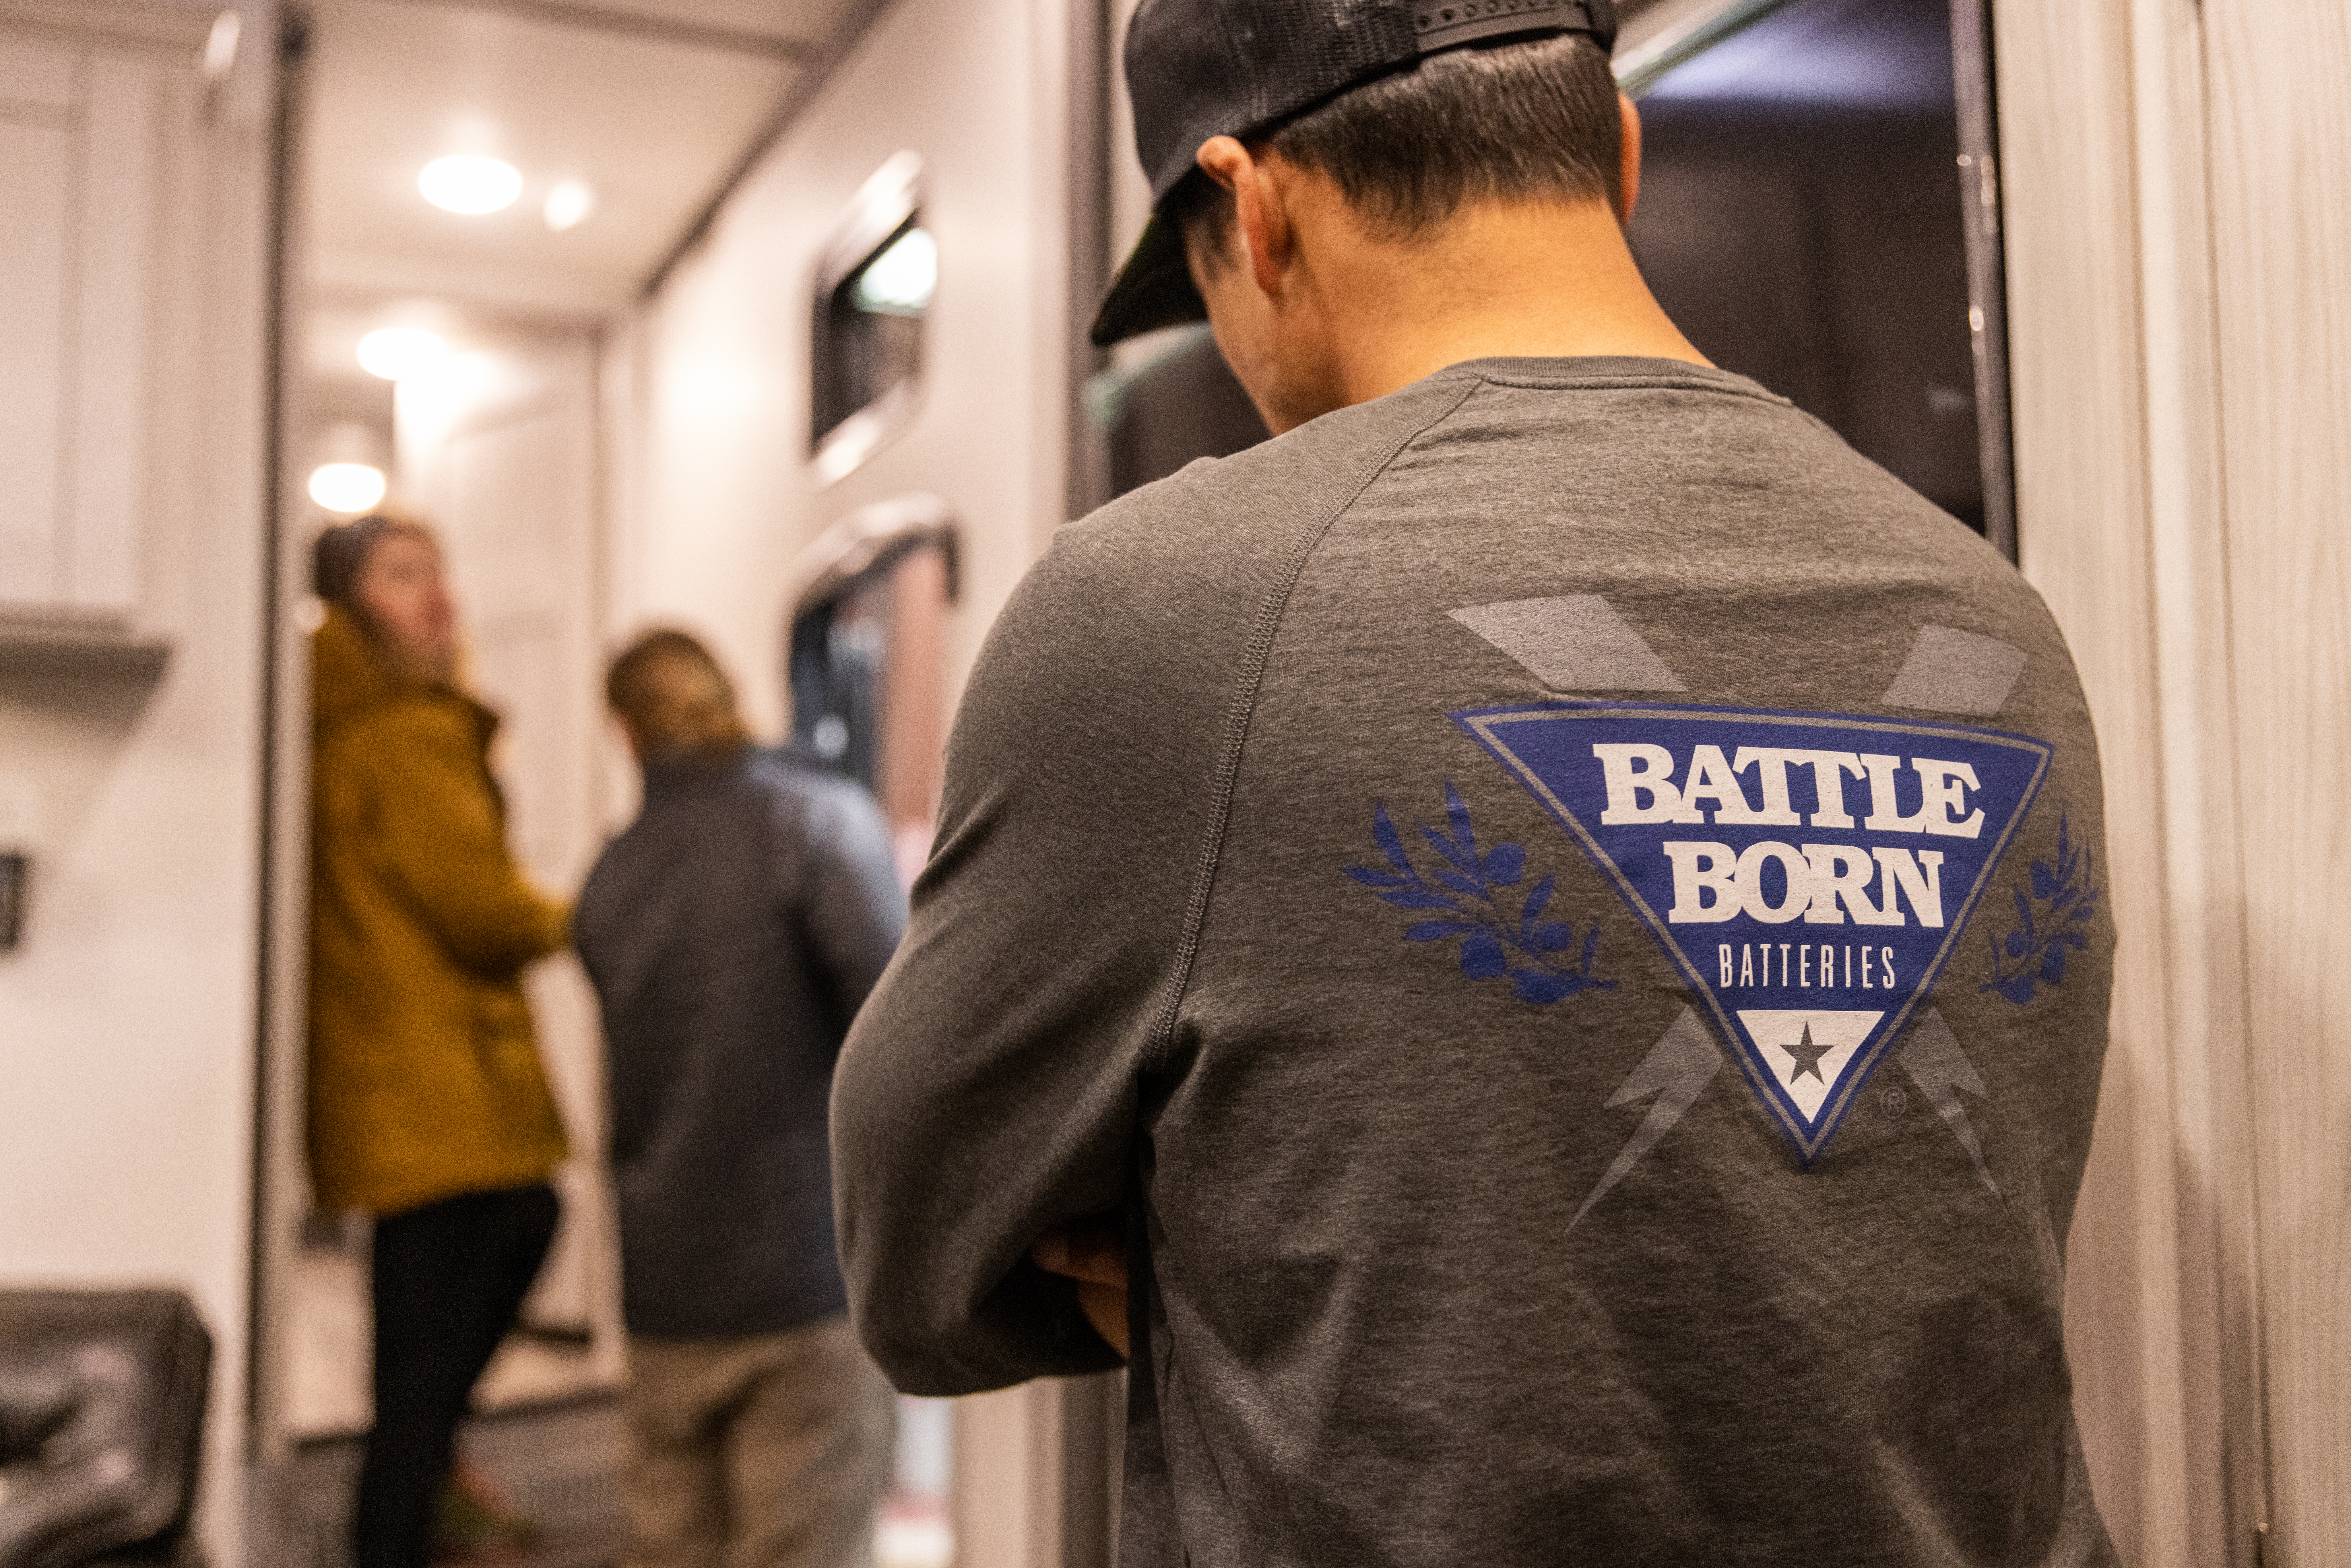 Chris Zaldain in Battle Born Batteries Shirt in New RV at Fifth Wheel Pick Up